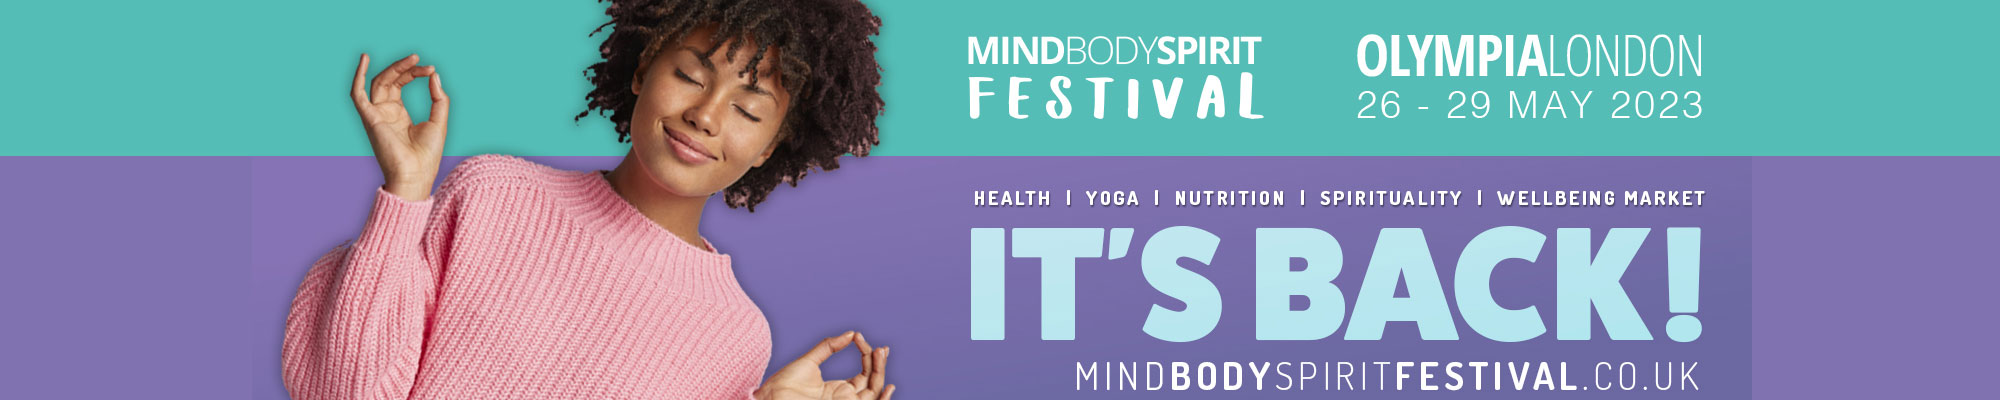 Mind Body Spirit Festival Olympia London 2023 - Tranquil Retreats